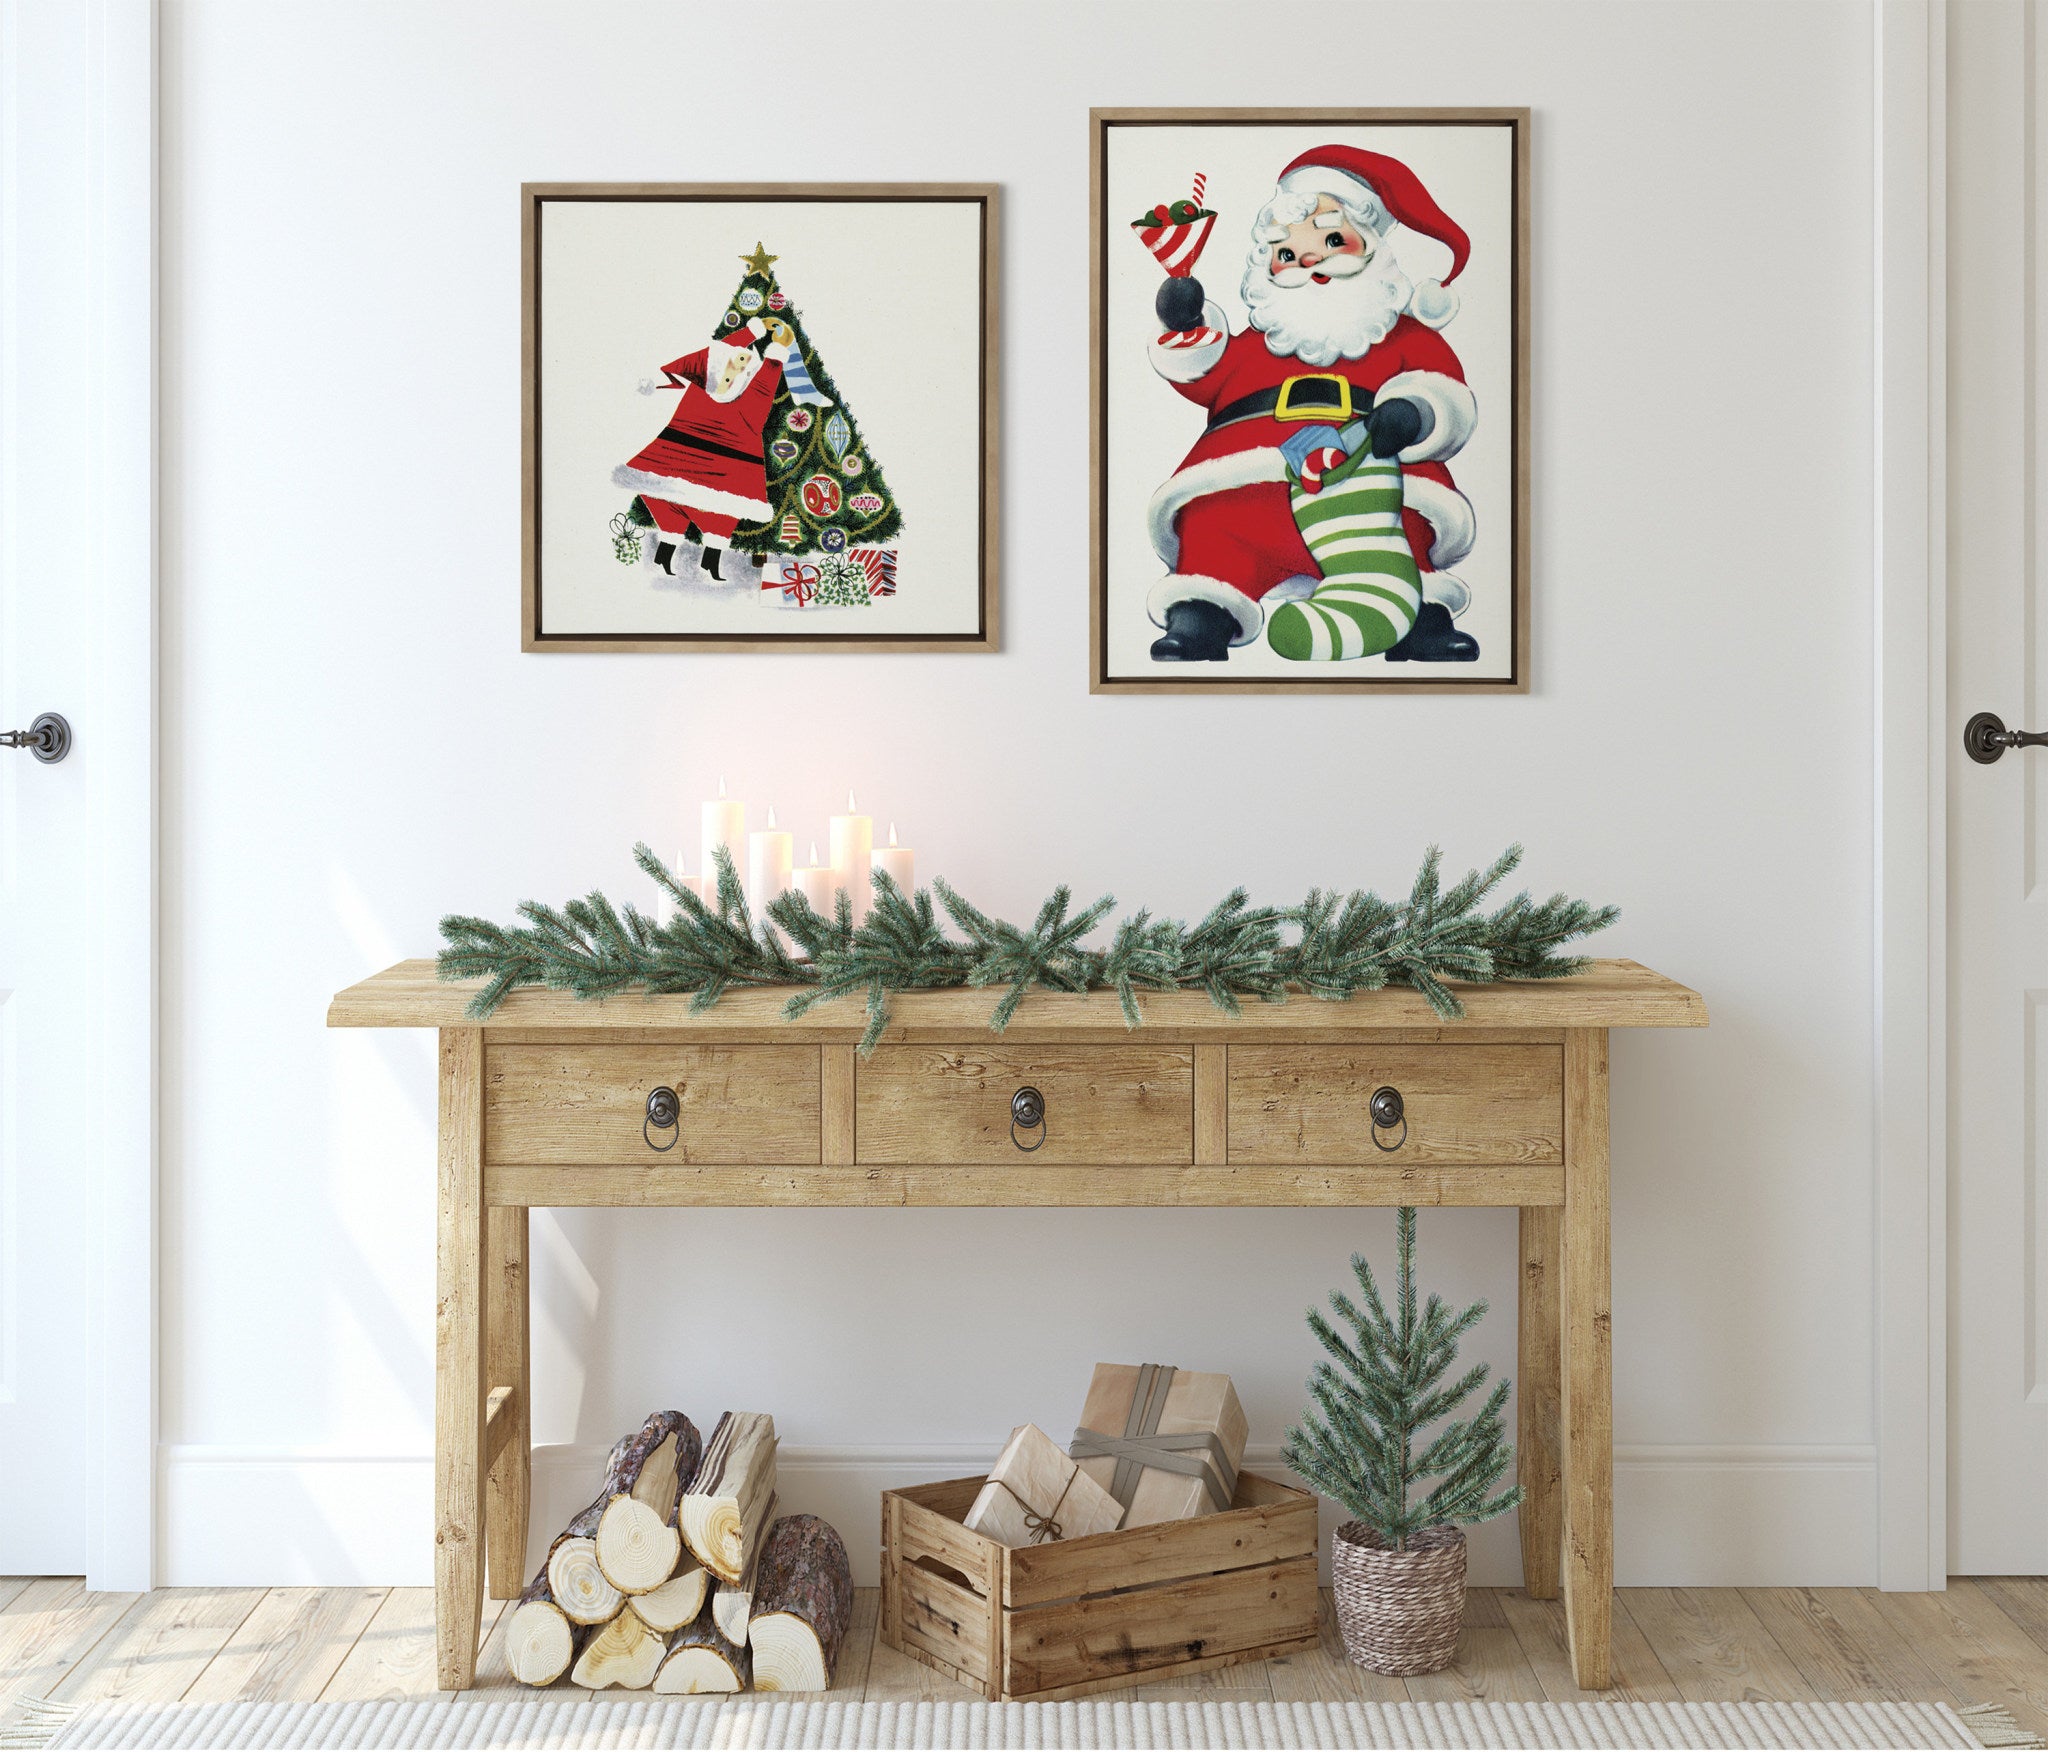 Sylvie Santa Claus Decorating Tree Framed Canvas by Corinna Buchholz of Piddix